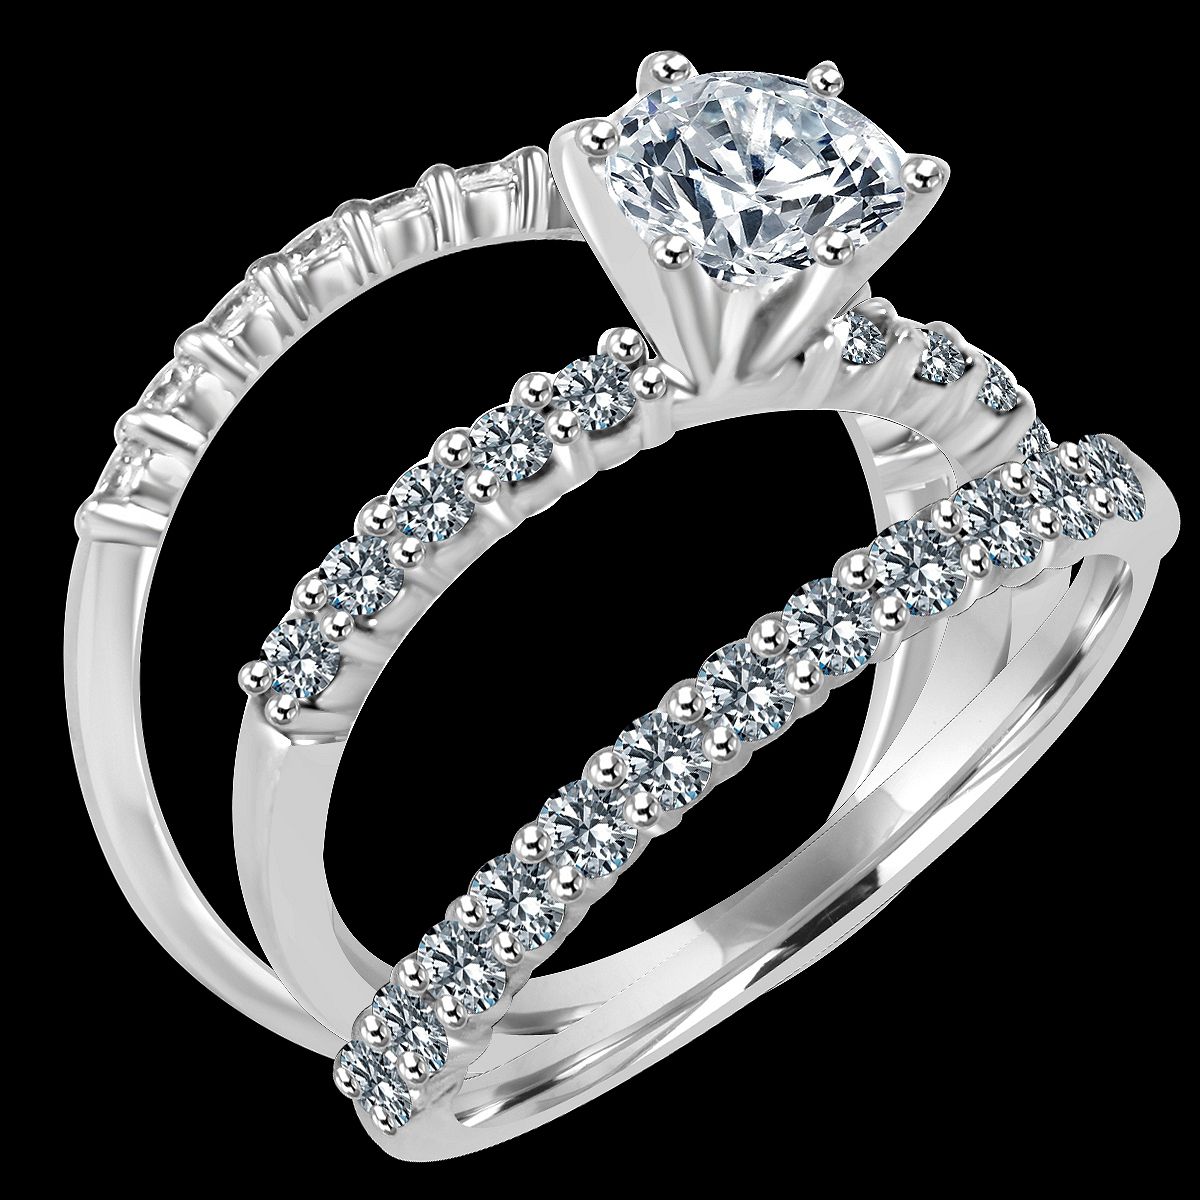 1CT ( 6.5mm) intensely brilliant Diamond Veneer Trio Engagement/ Wedding ensemble set in Sterling Silver Ring. 635R71359